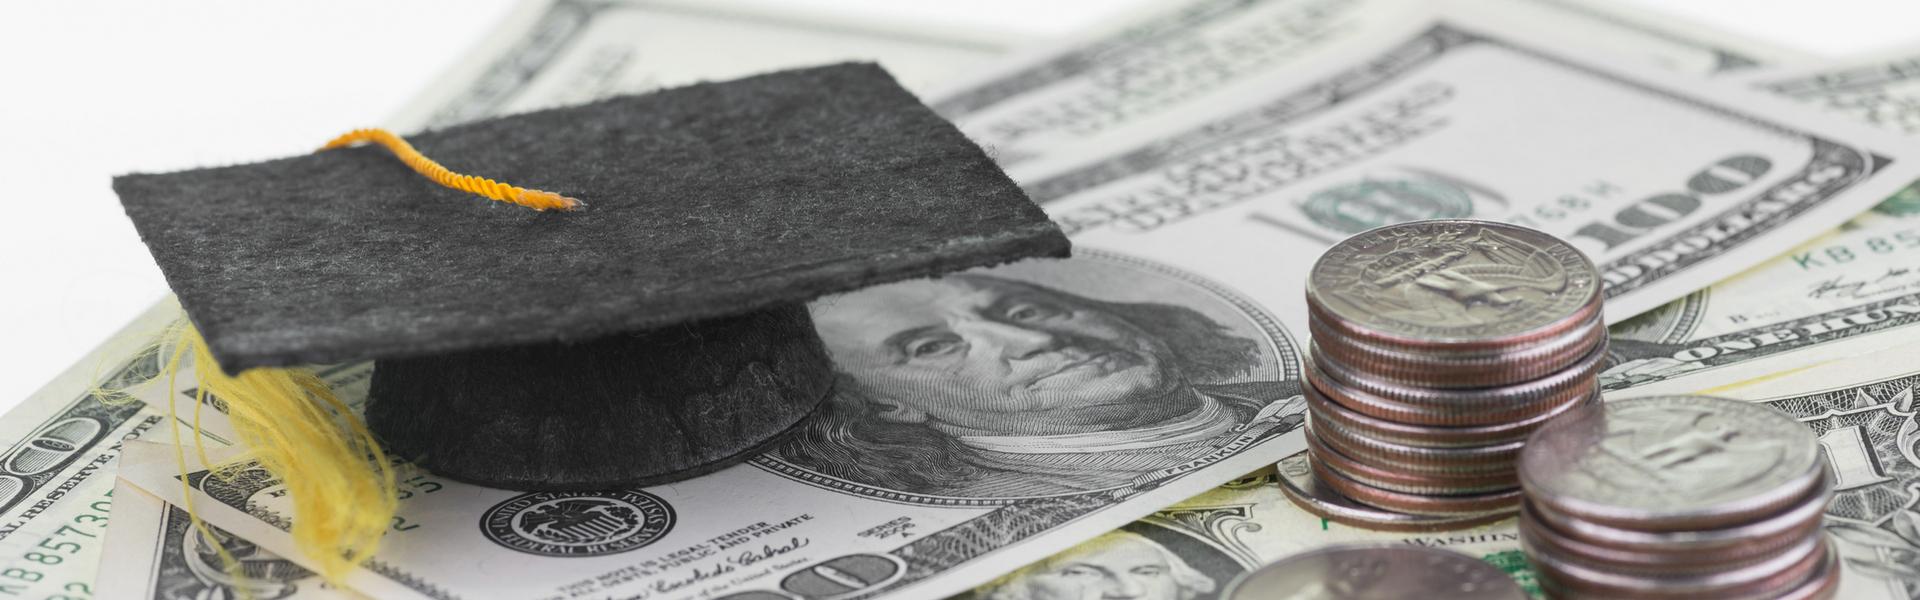 A graduation cap sitting on a pile of money.